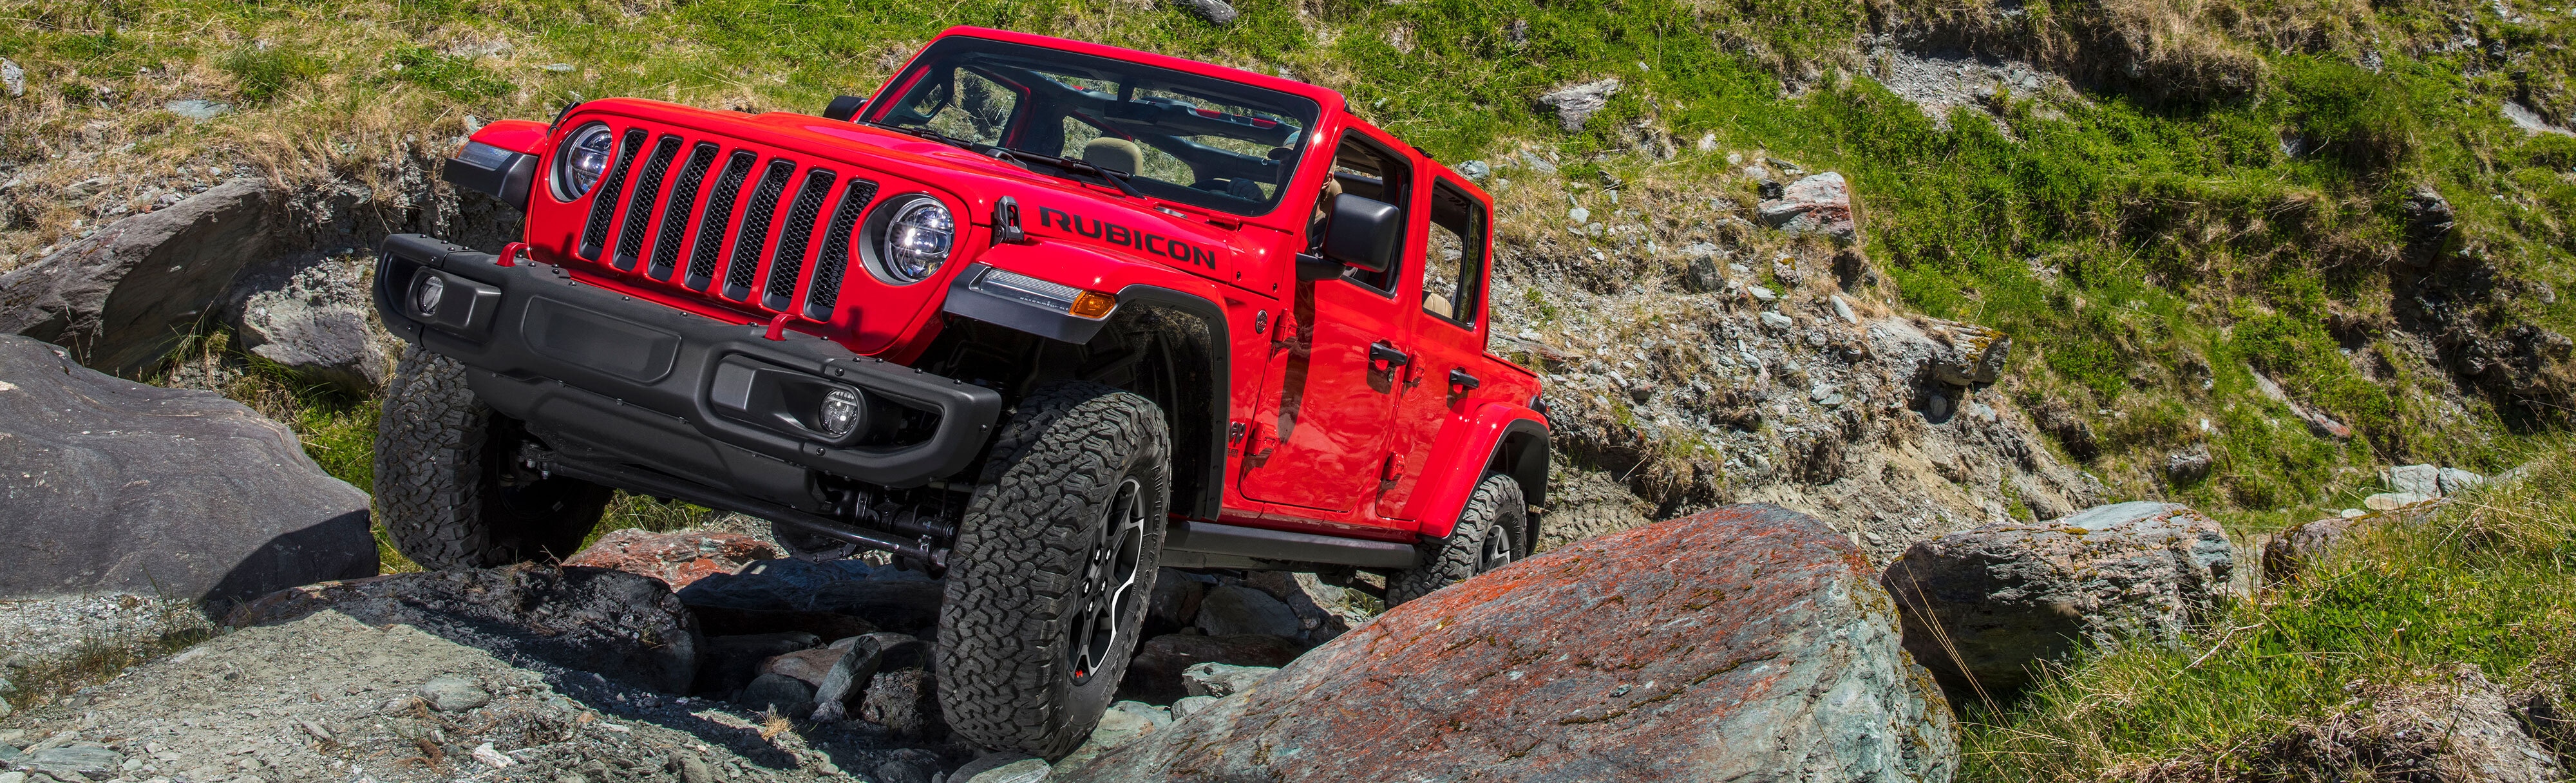 new jeep wrangler driving up rocks